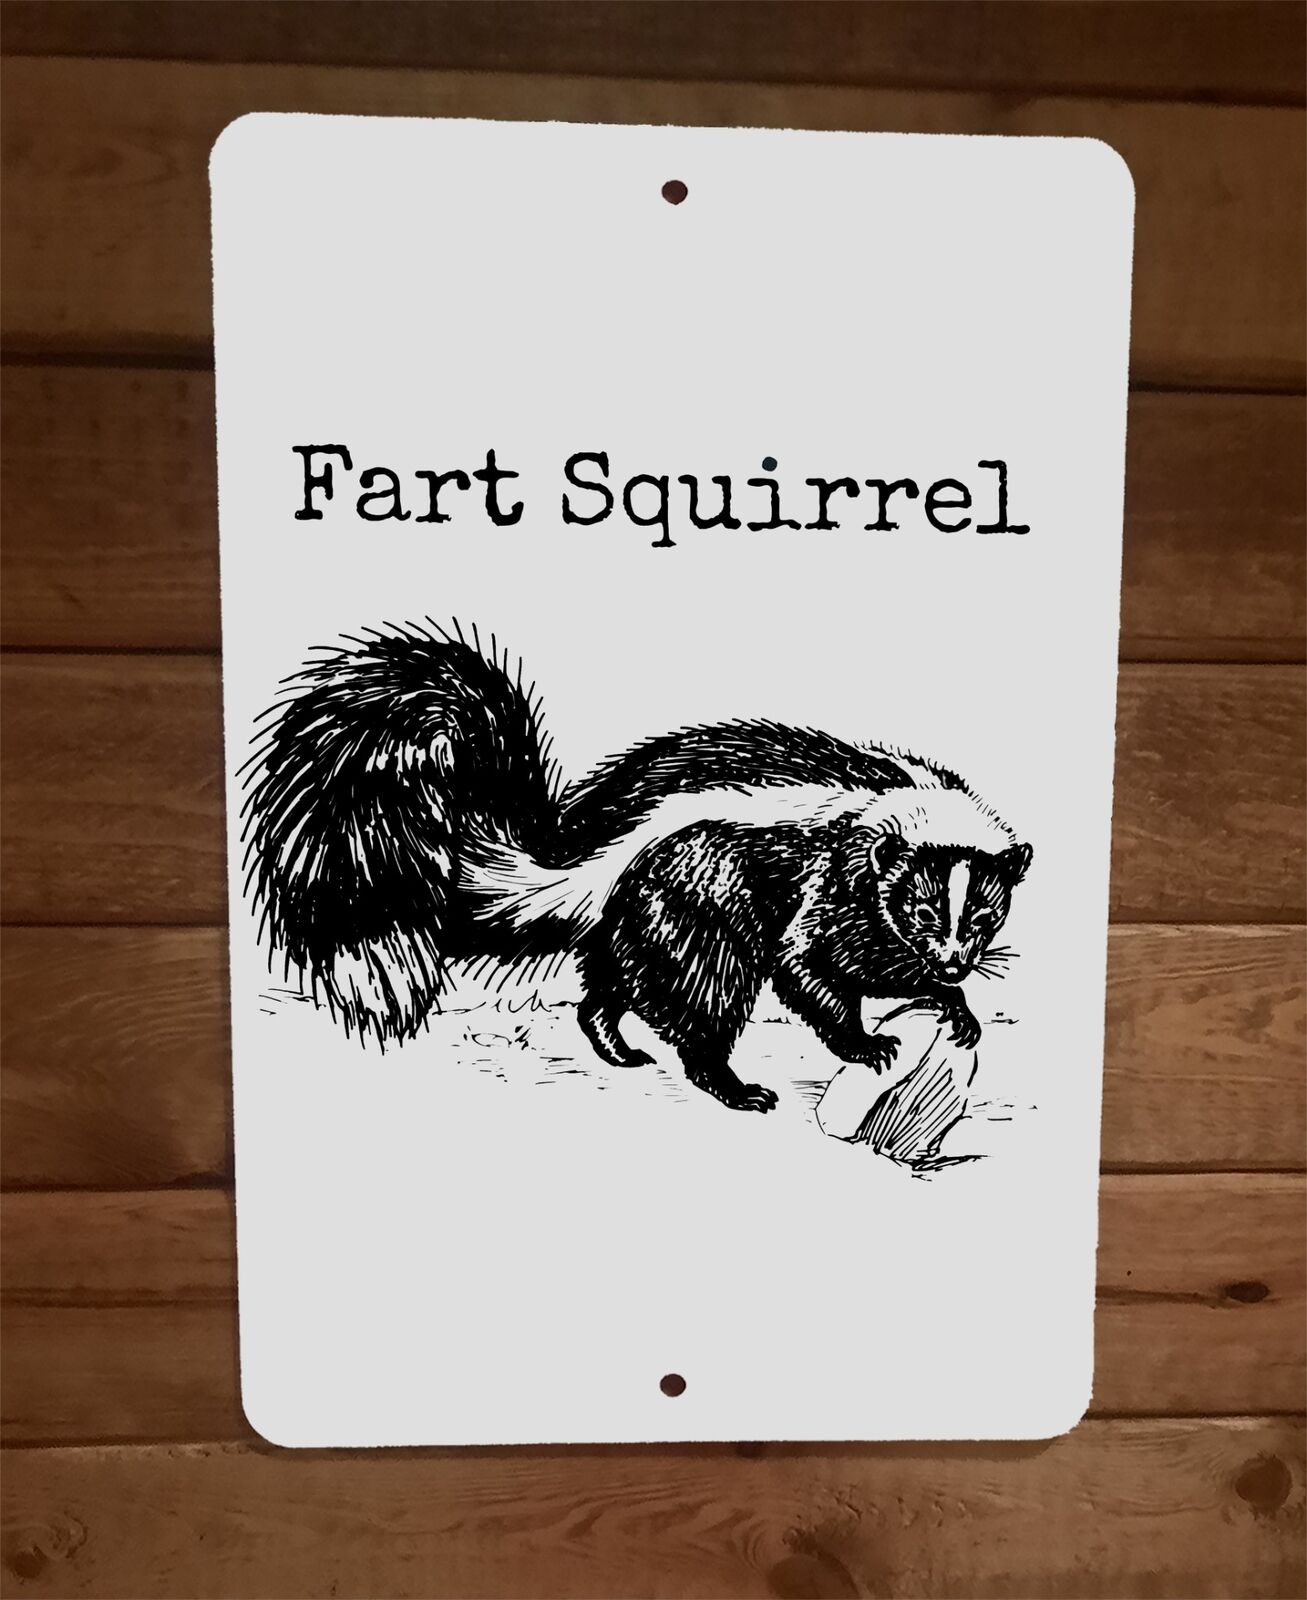 Fart Squirrel Skunk 8x12 Metal Wall Sign